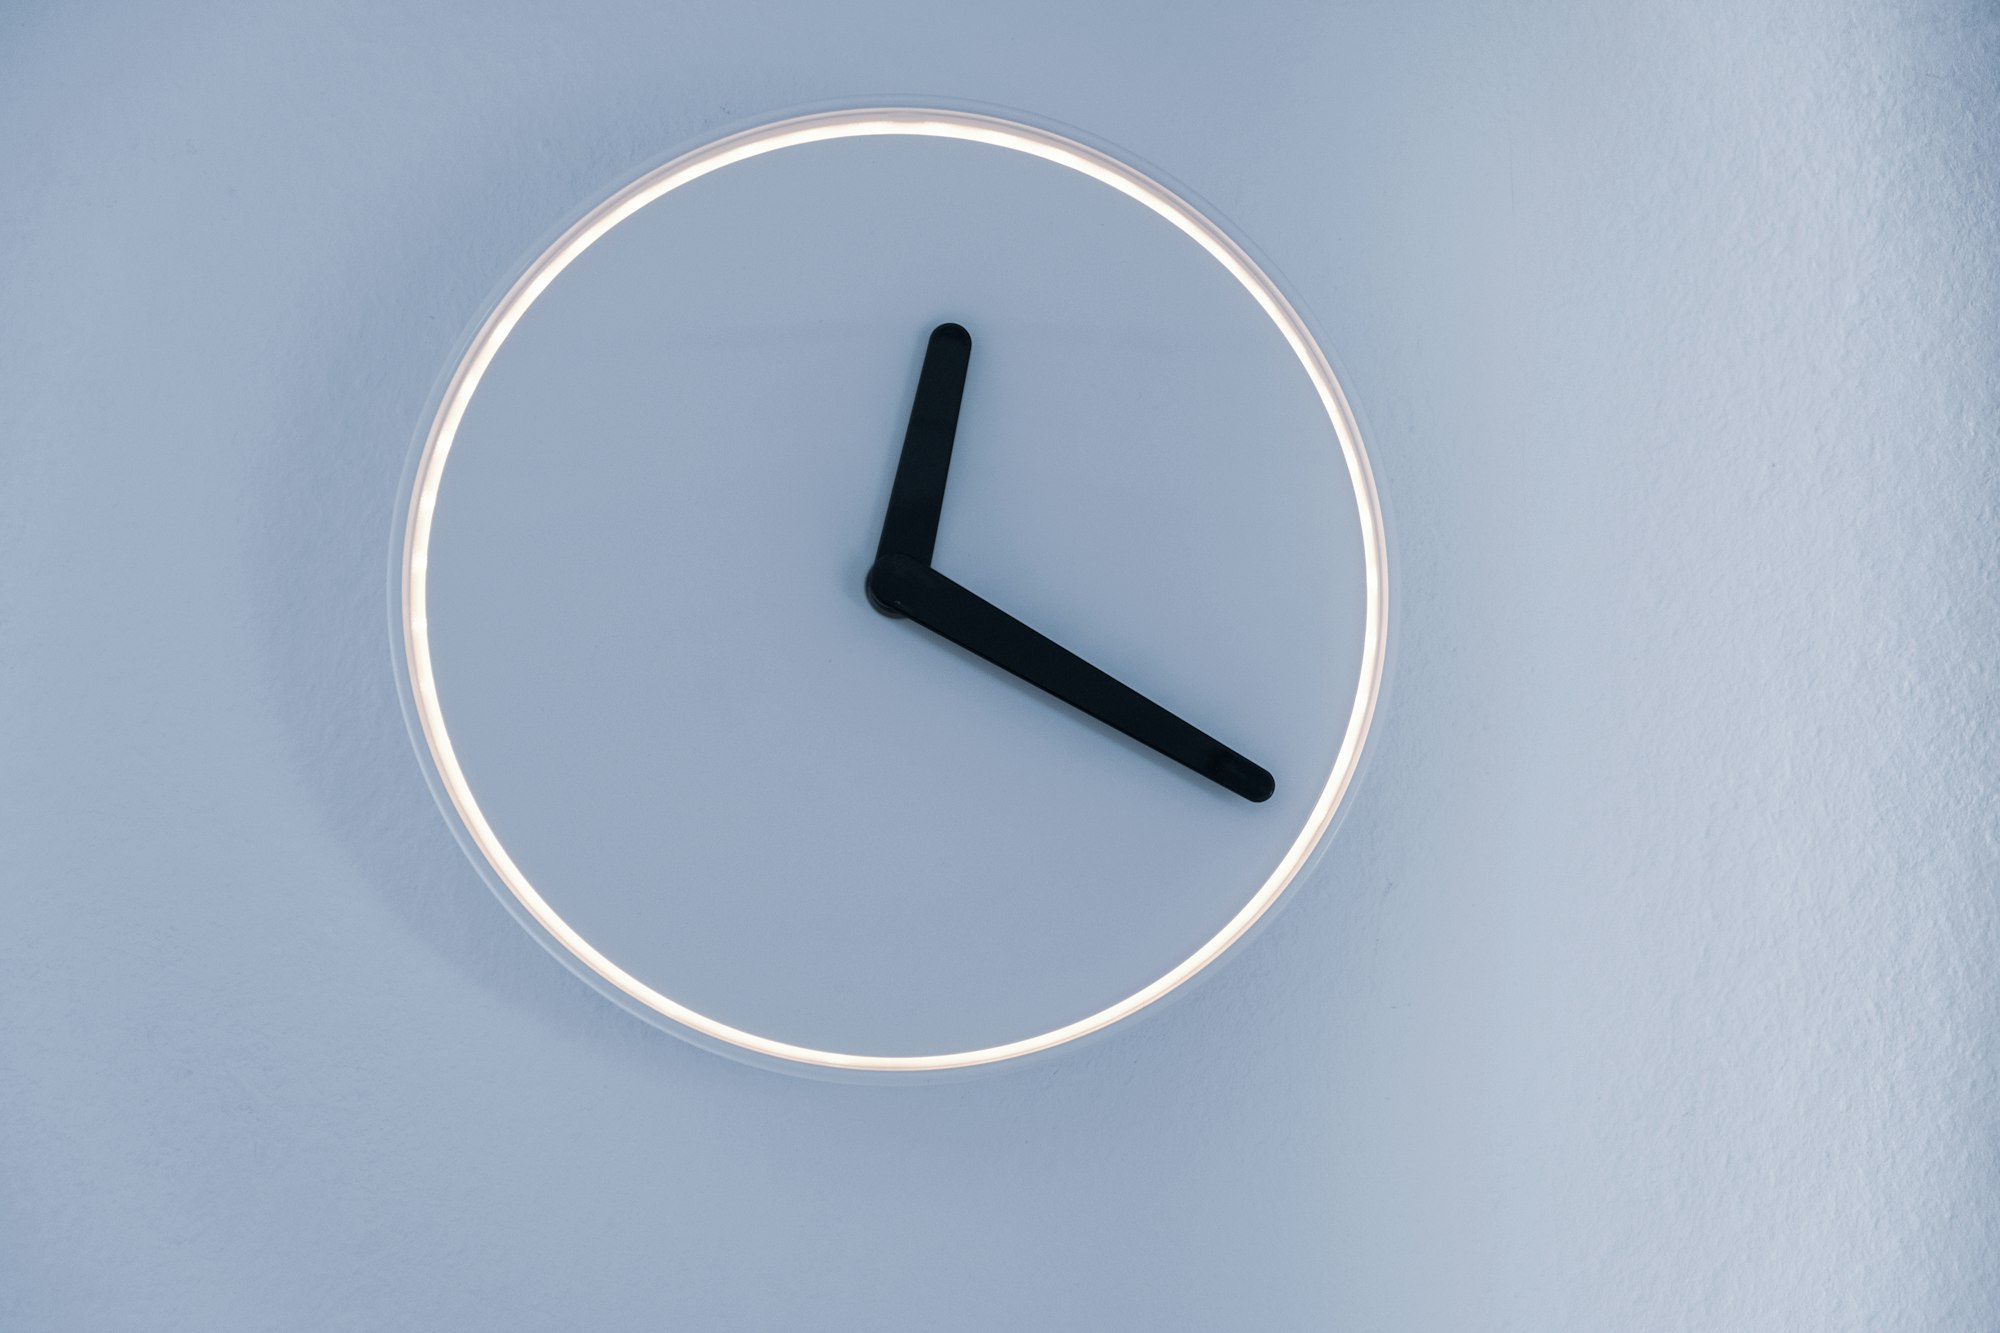 Your circadian rhythm is run by clock genes by Moritz Kindler for Unsplash.